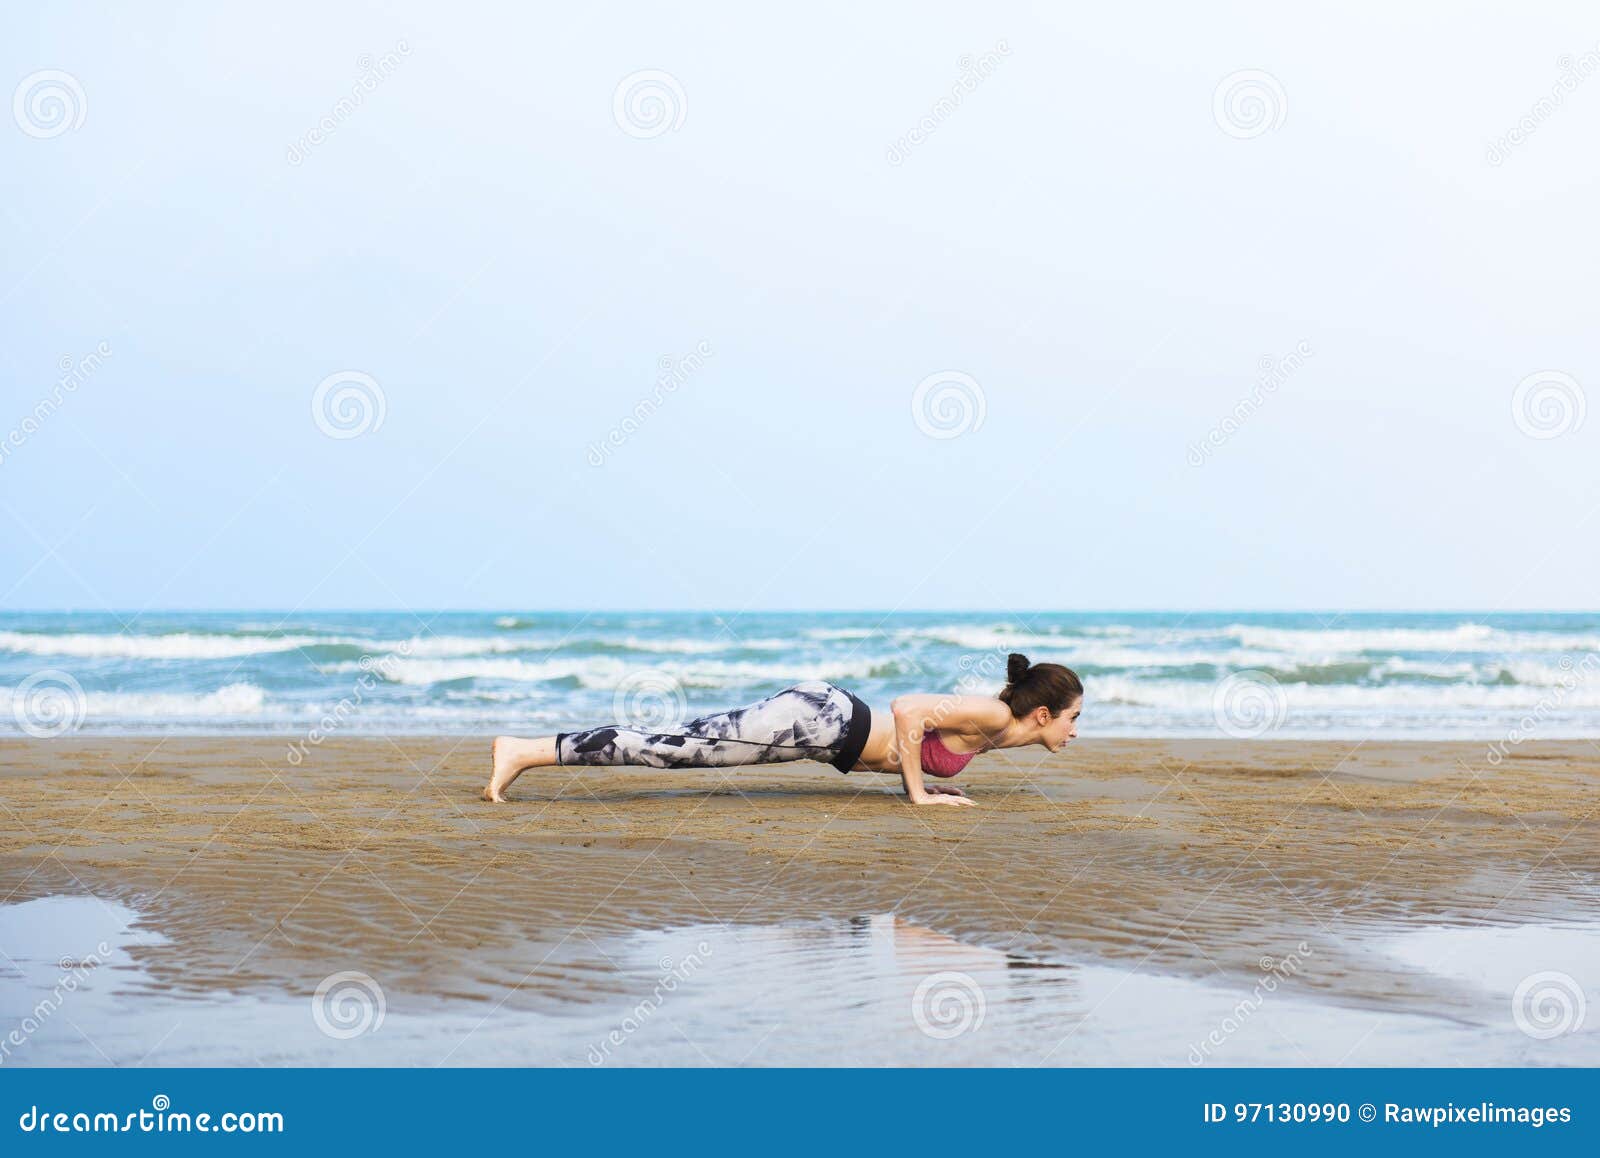 woman planking stretching flex training healthy lifestyle beach